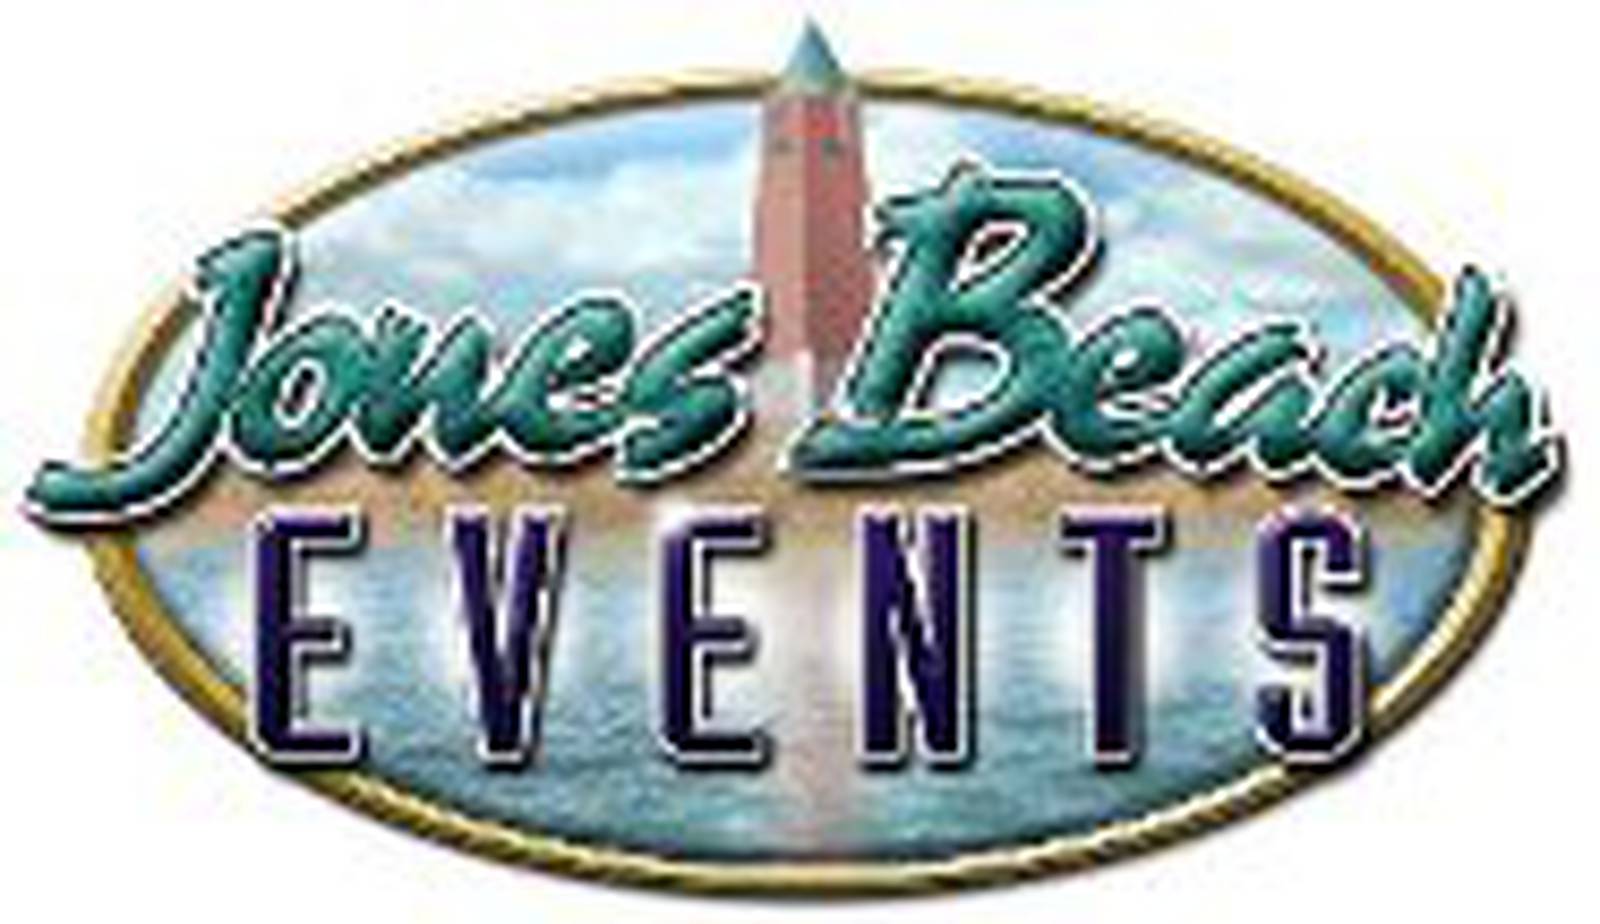 WBAB Friday Night Concert Series at the Friendly's Band Shell at Jones